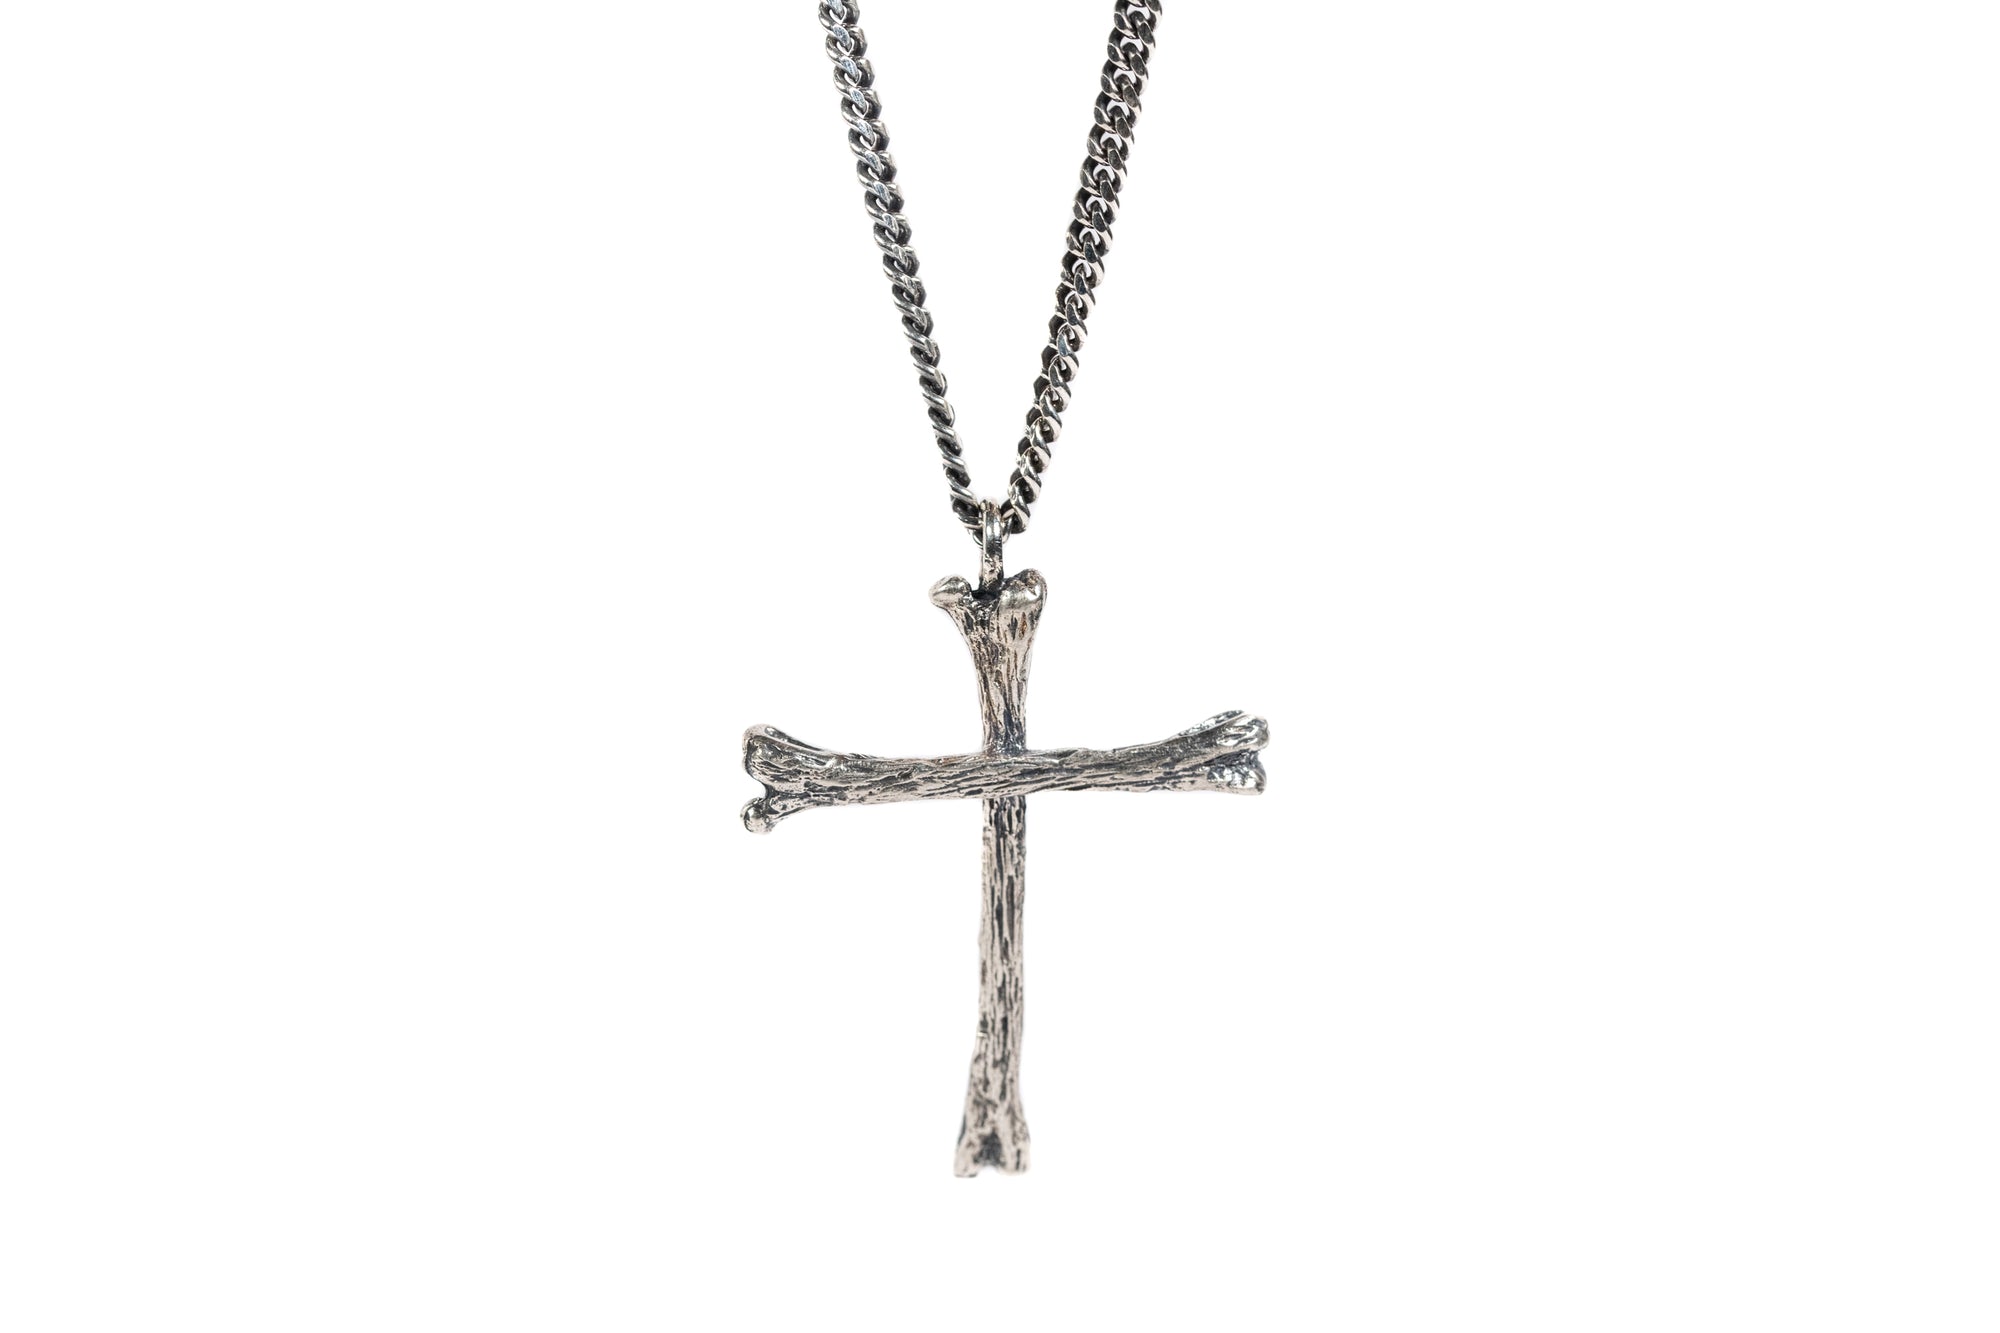 The Bone Cross Necklace